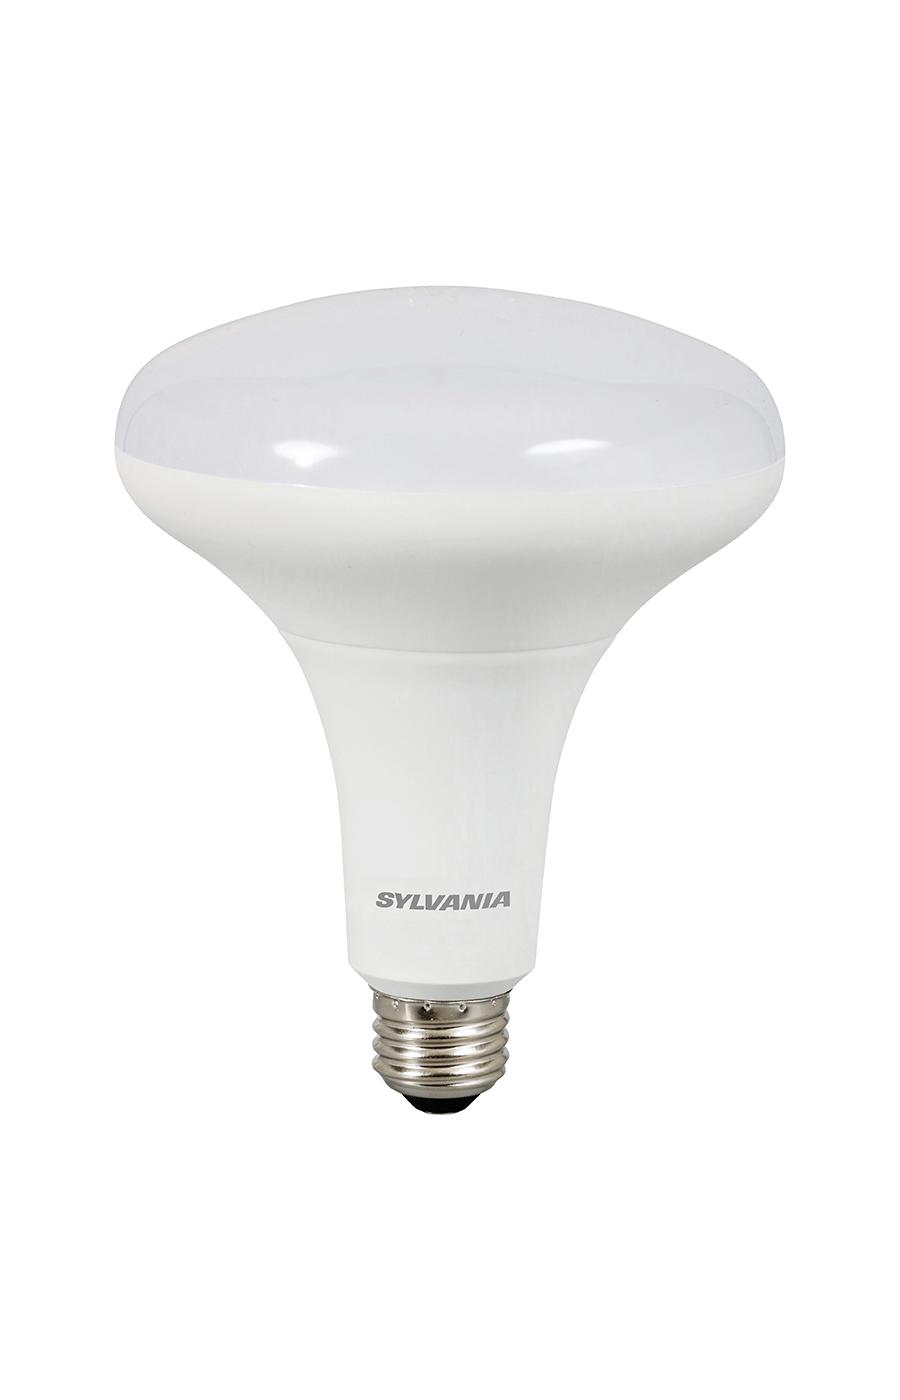 Sylvania TruWave BR40 85-Watt LED Light Bulbs - Soft White; image 2 of 2